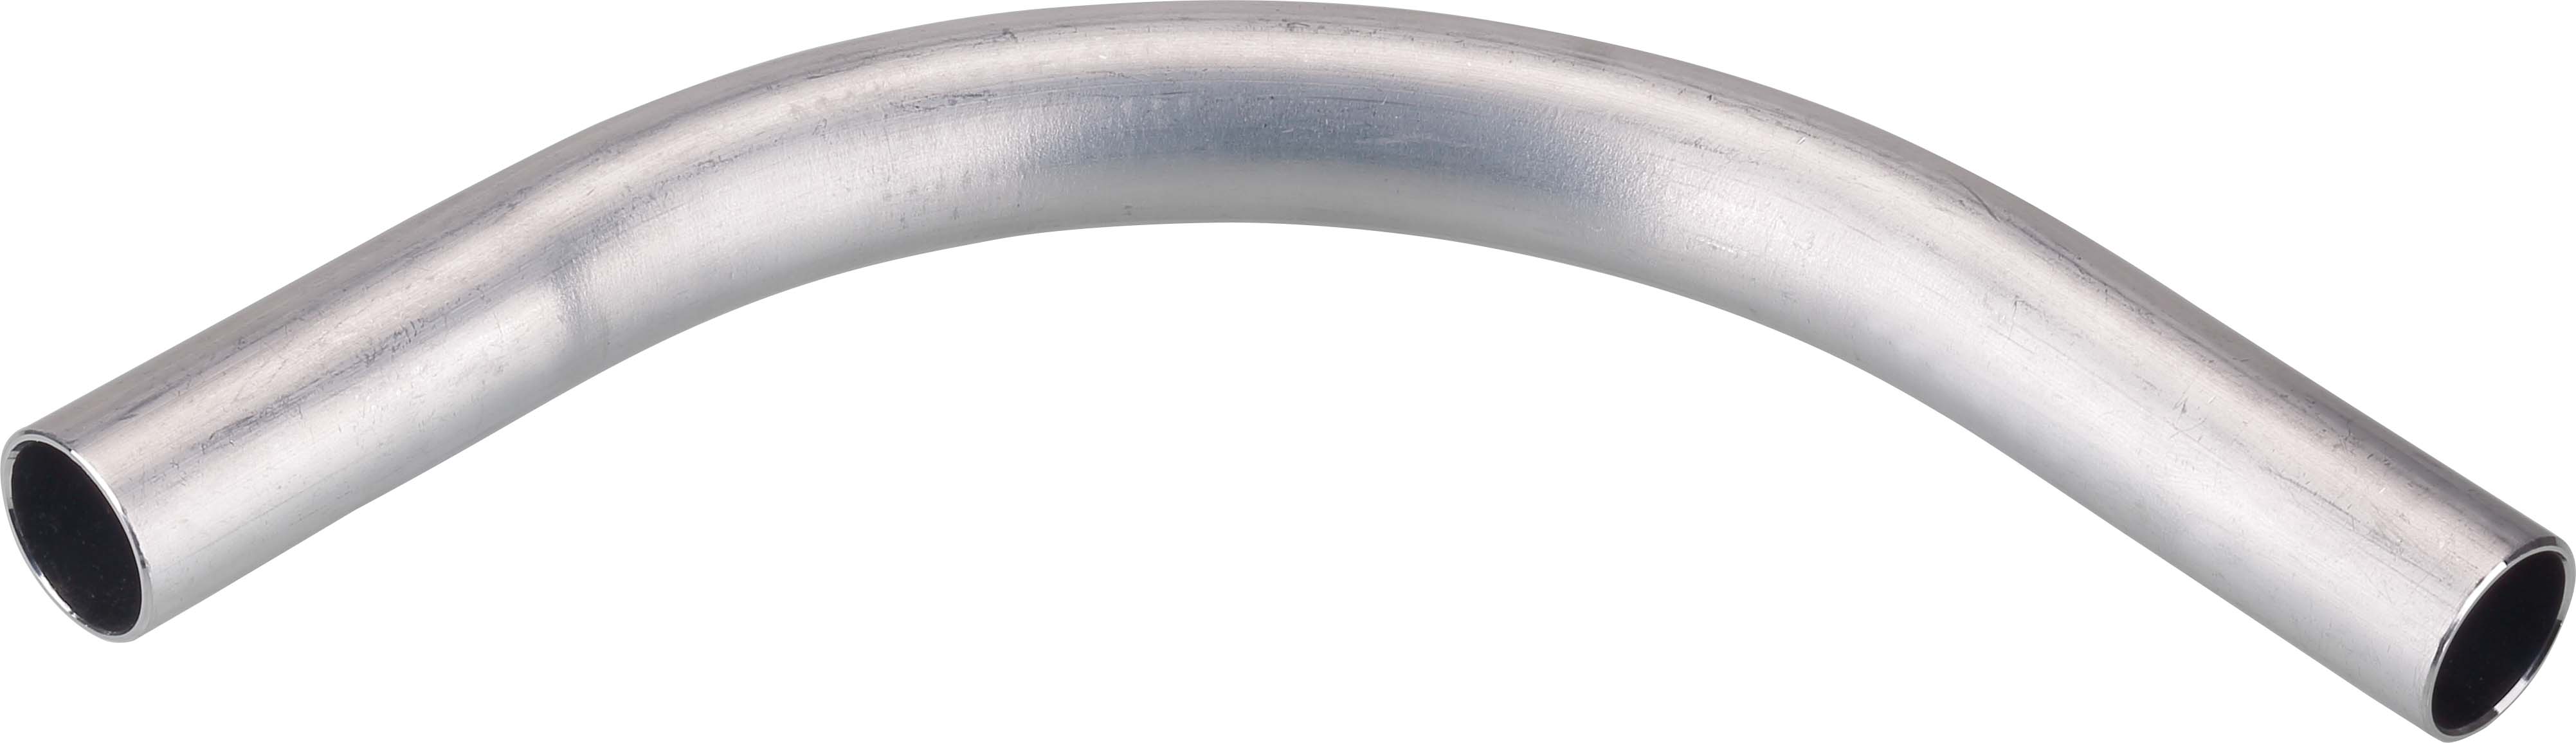 Fränkische Aluminium-Steckbogen ABS-E 32 - 20960032